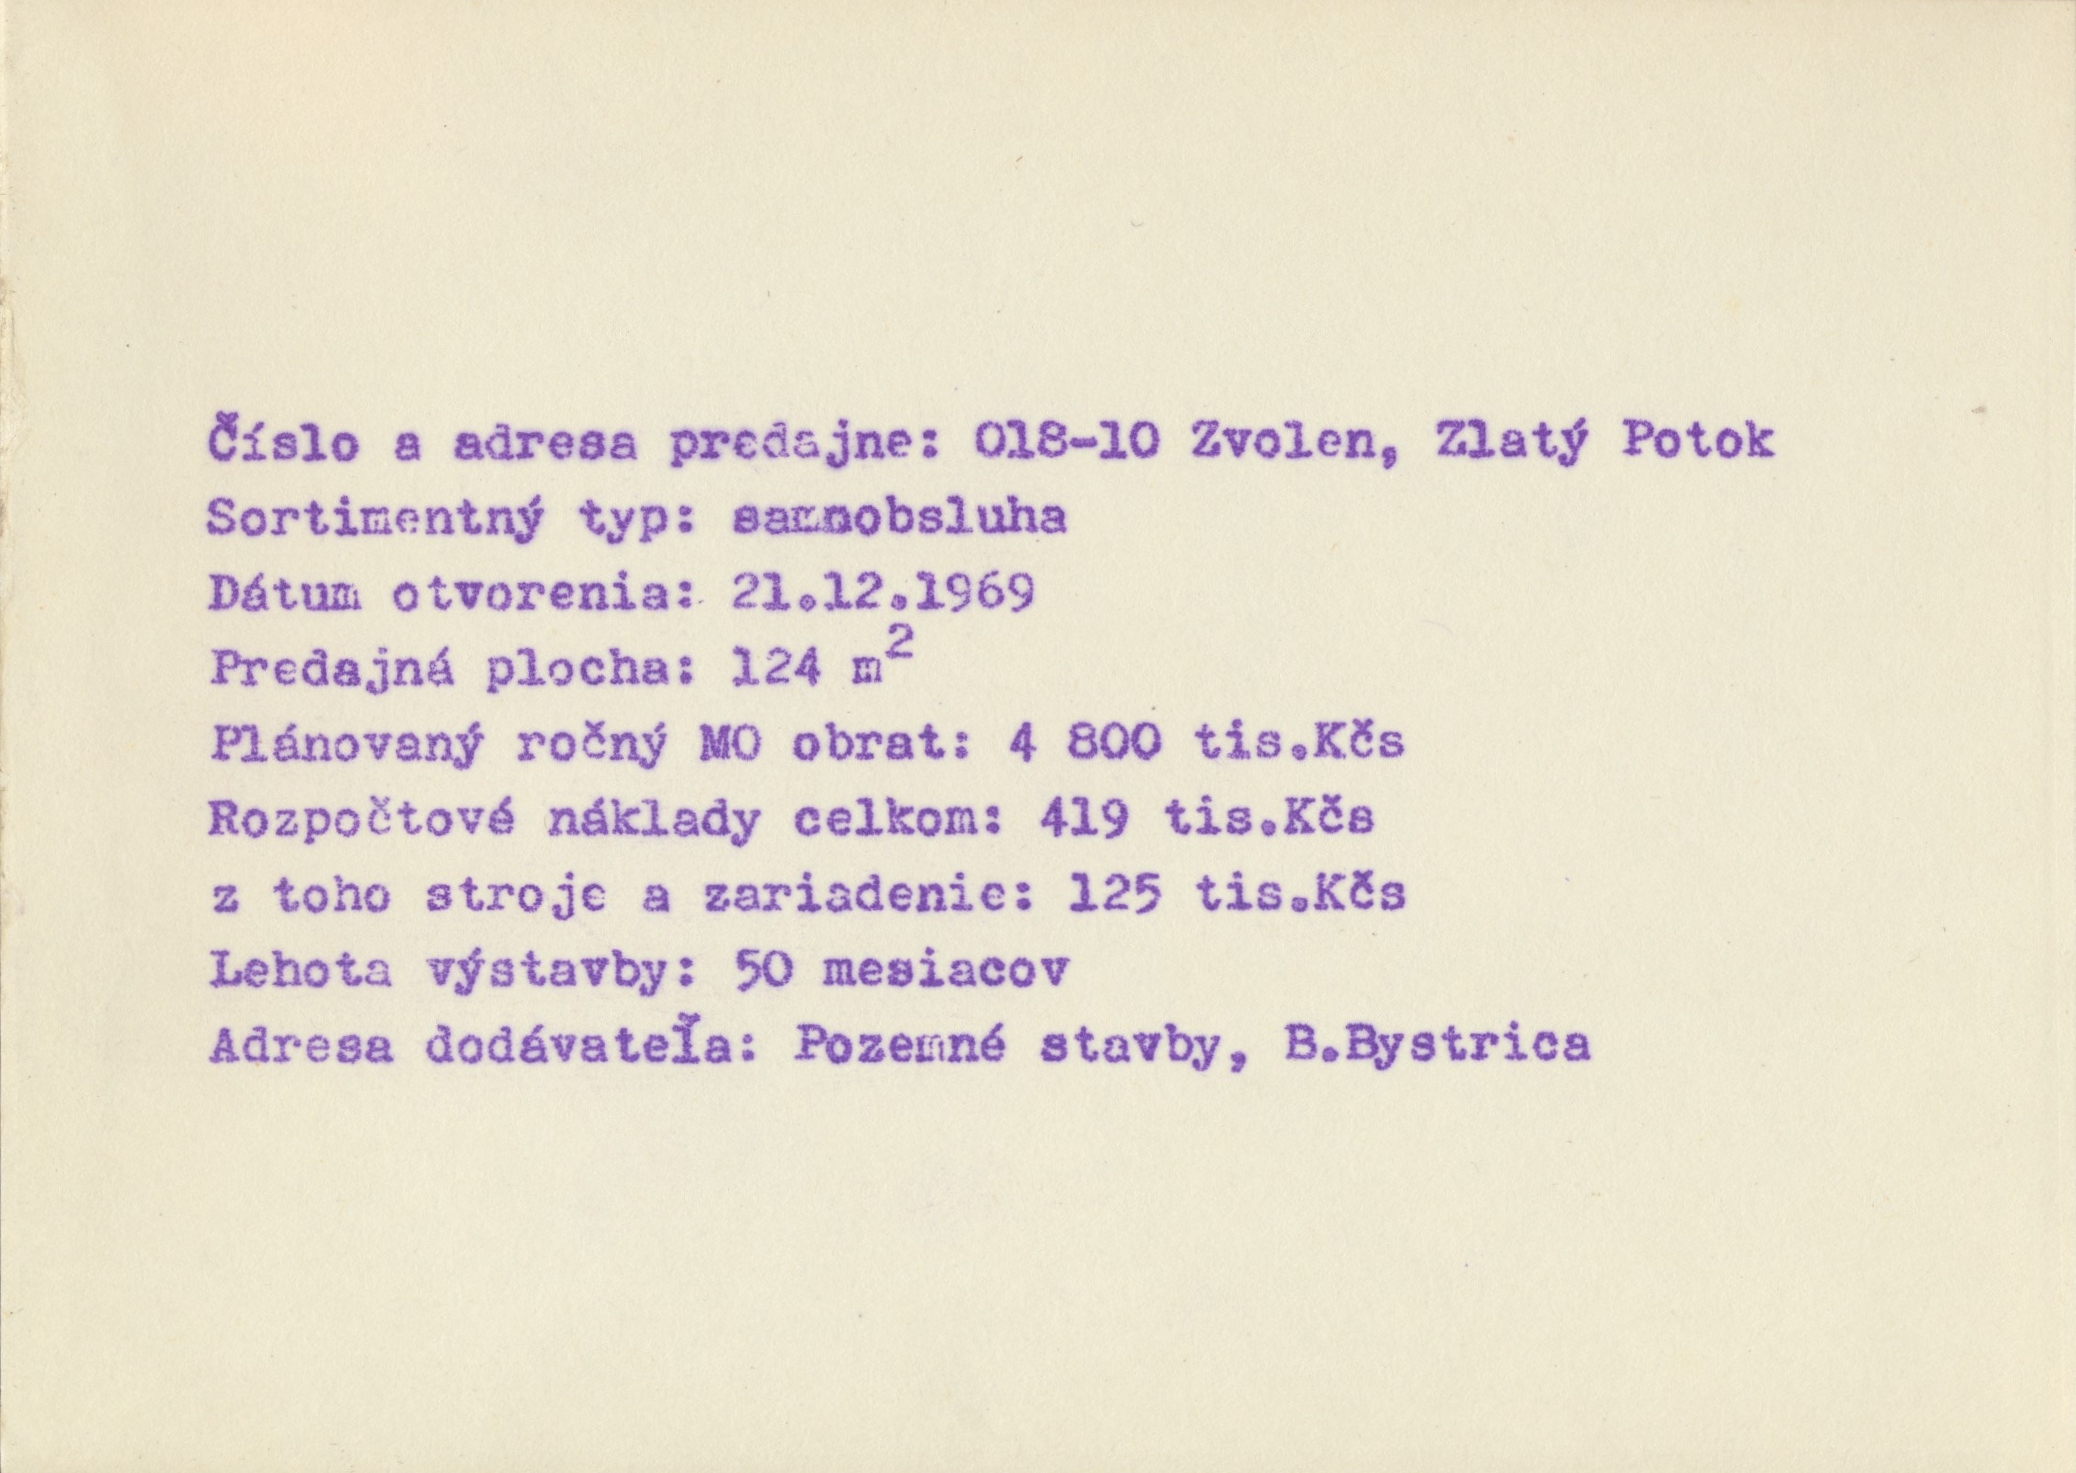 Katalog 1969 Banská Bystrica: Zvolen, Zlatý Potok